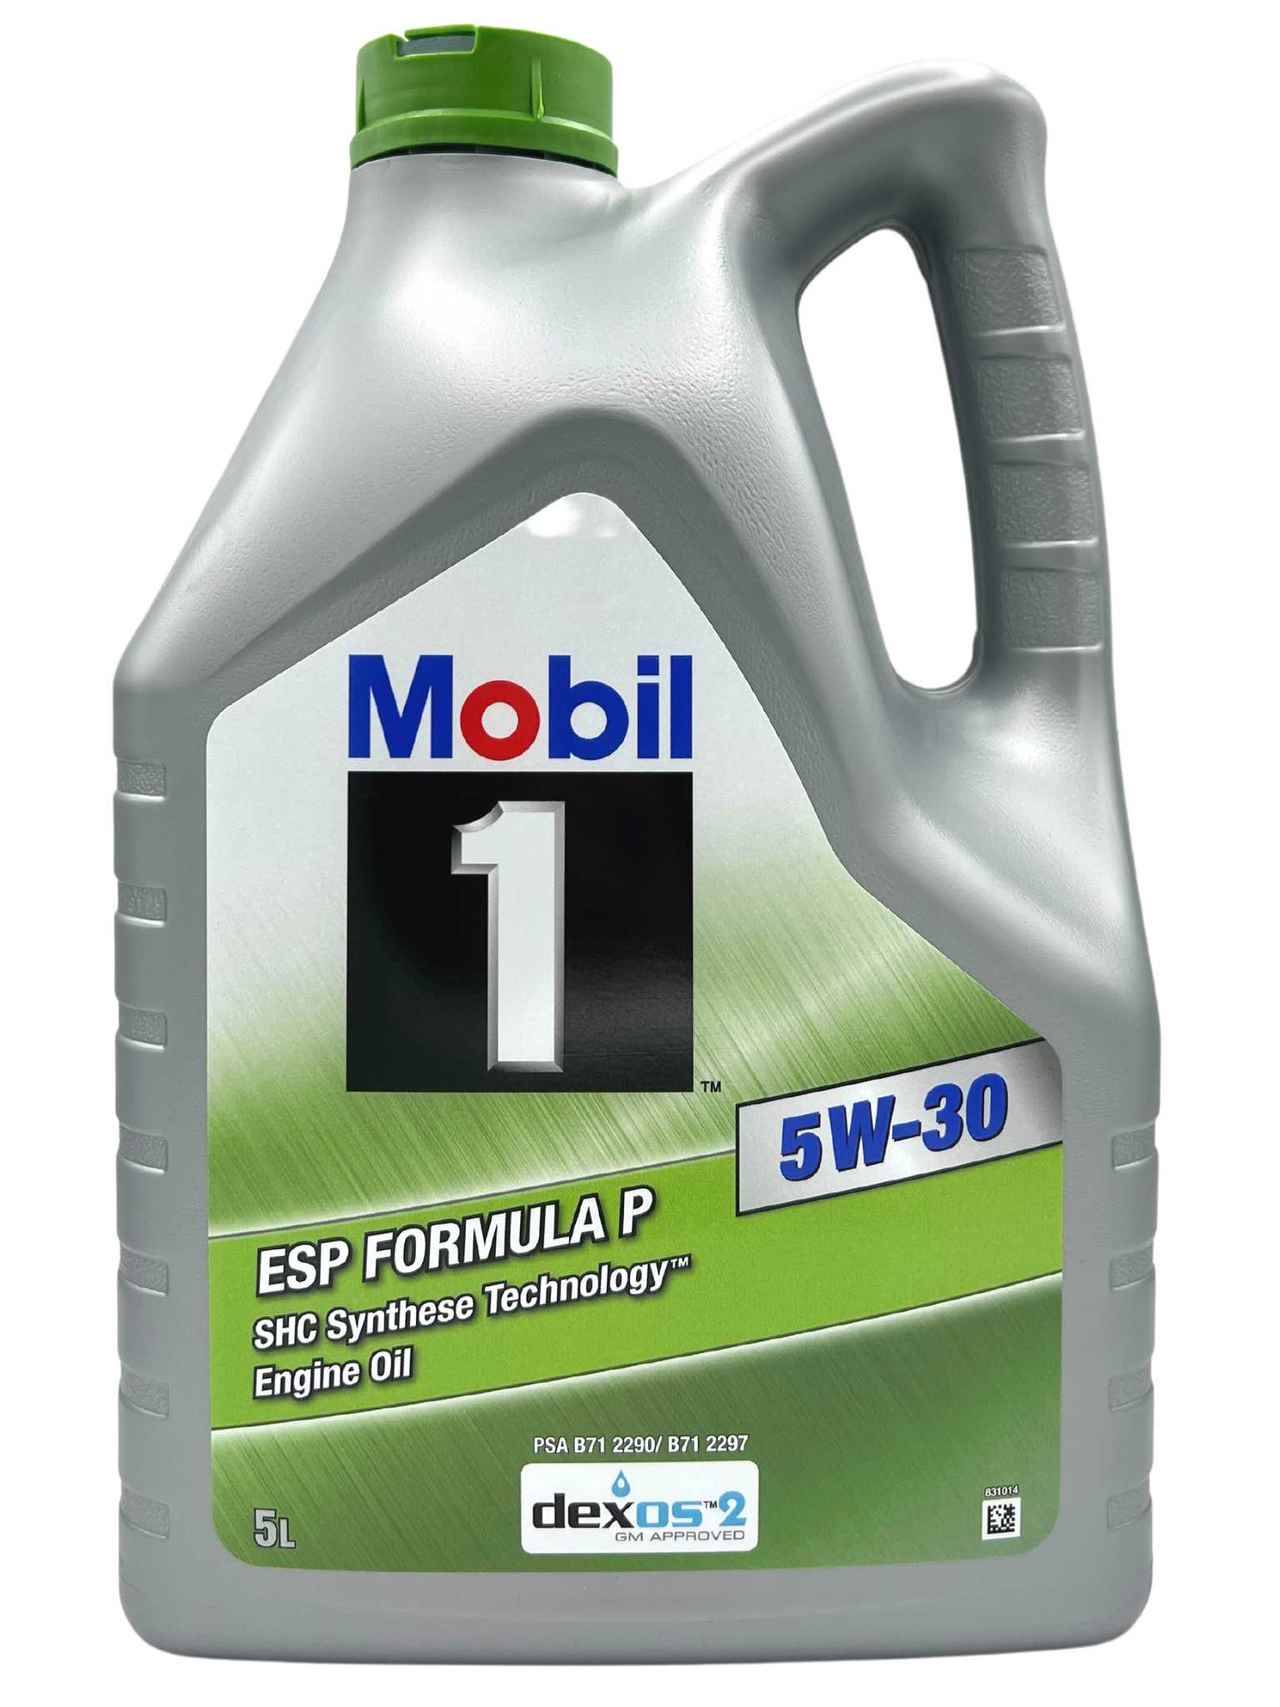 Mobil 1 ESP Formula P 5W-30 5 Liter